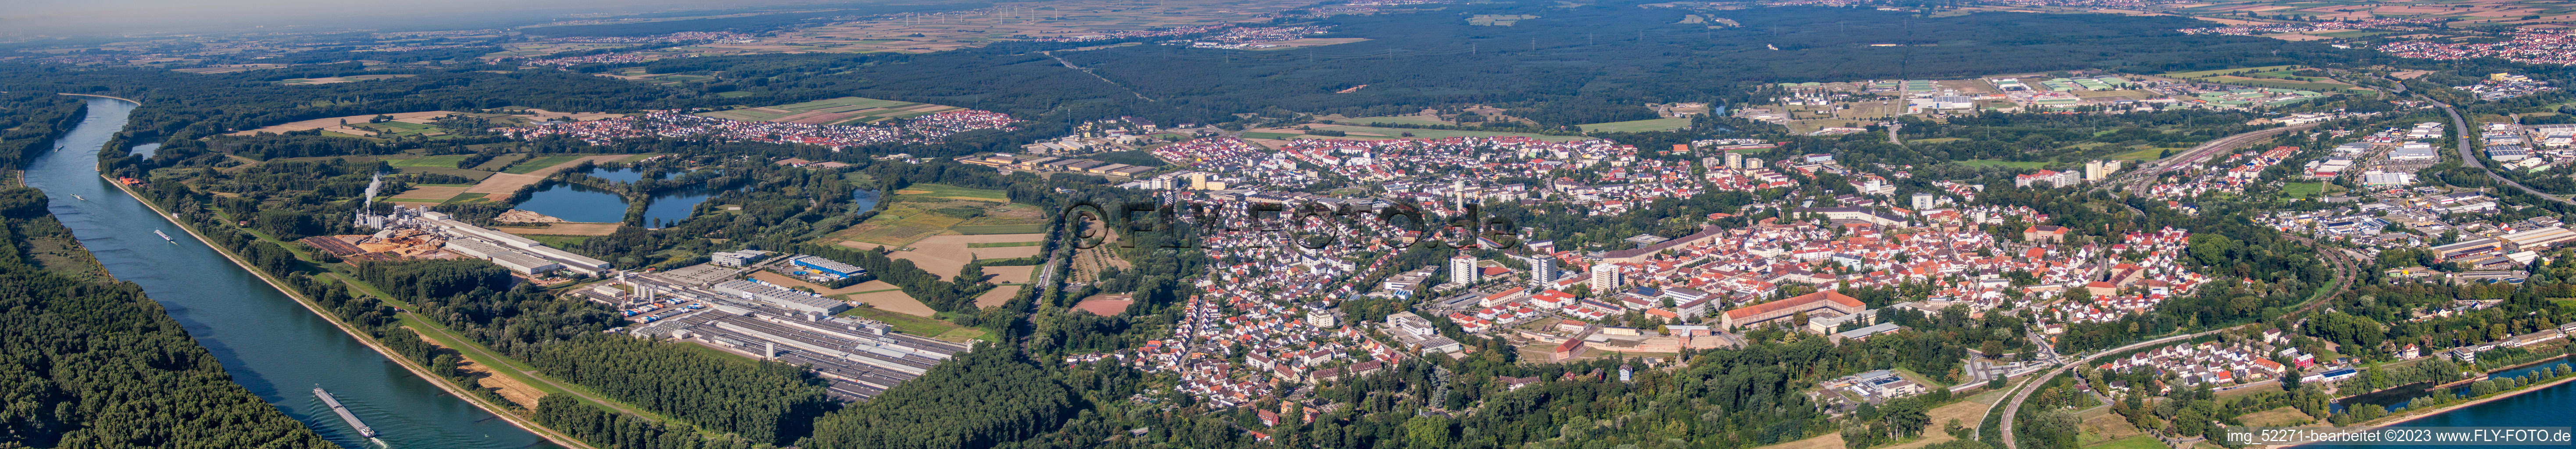 Panorama in Germersheim in the state Rhineland-Palatinate, Germany